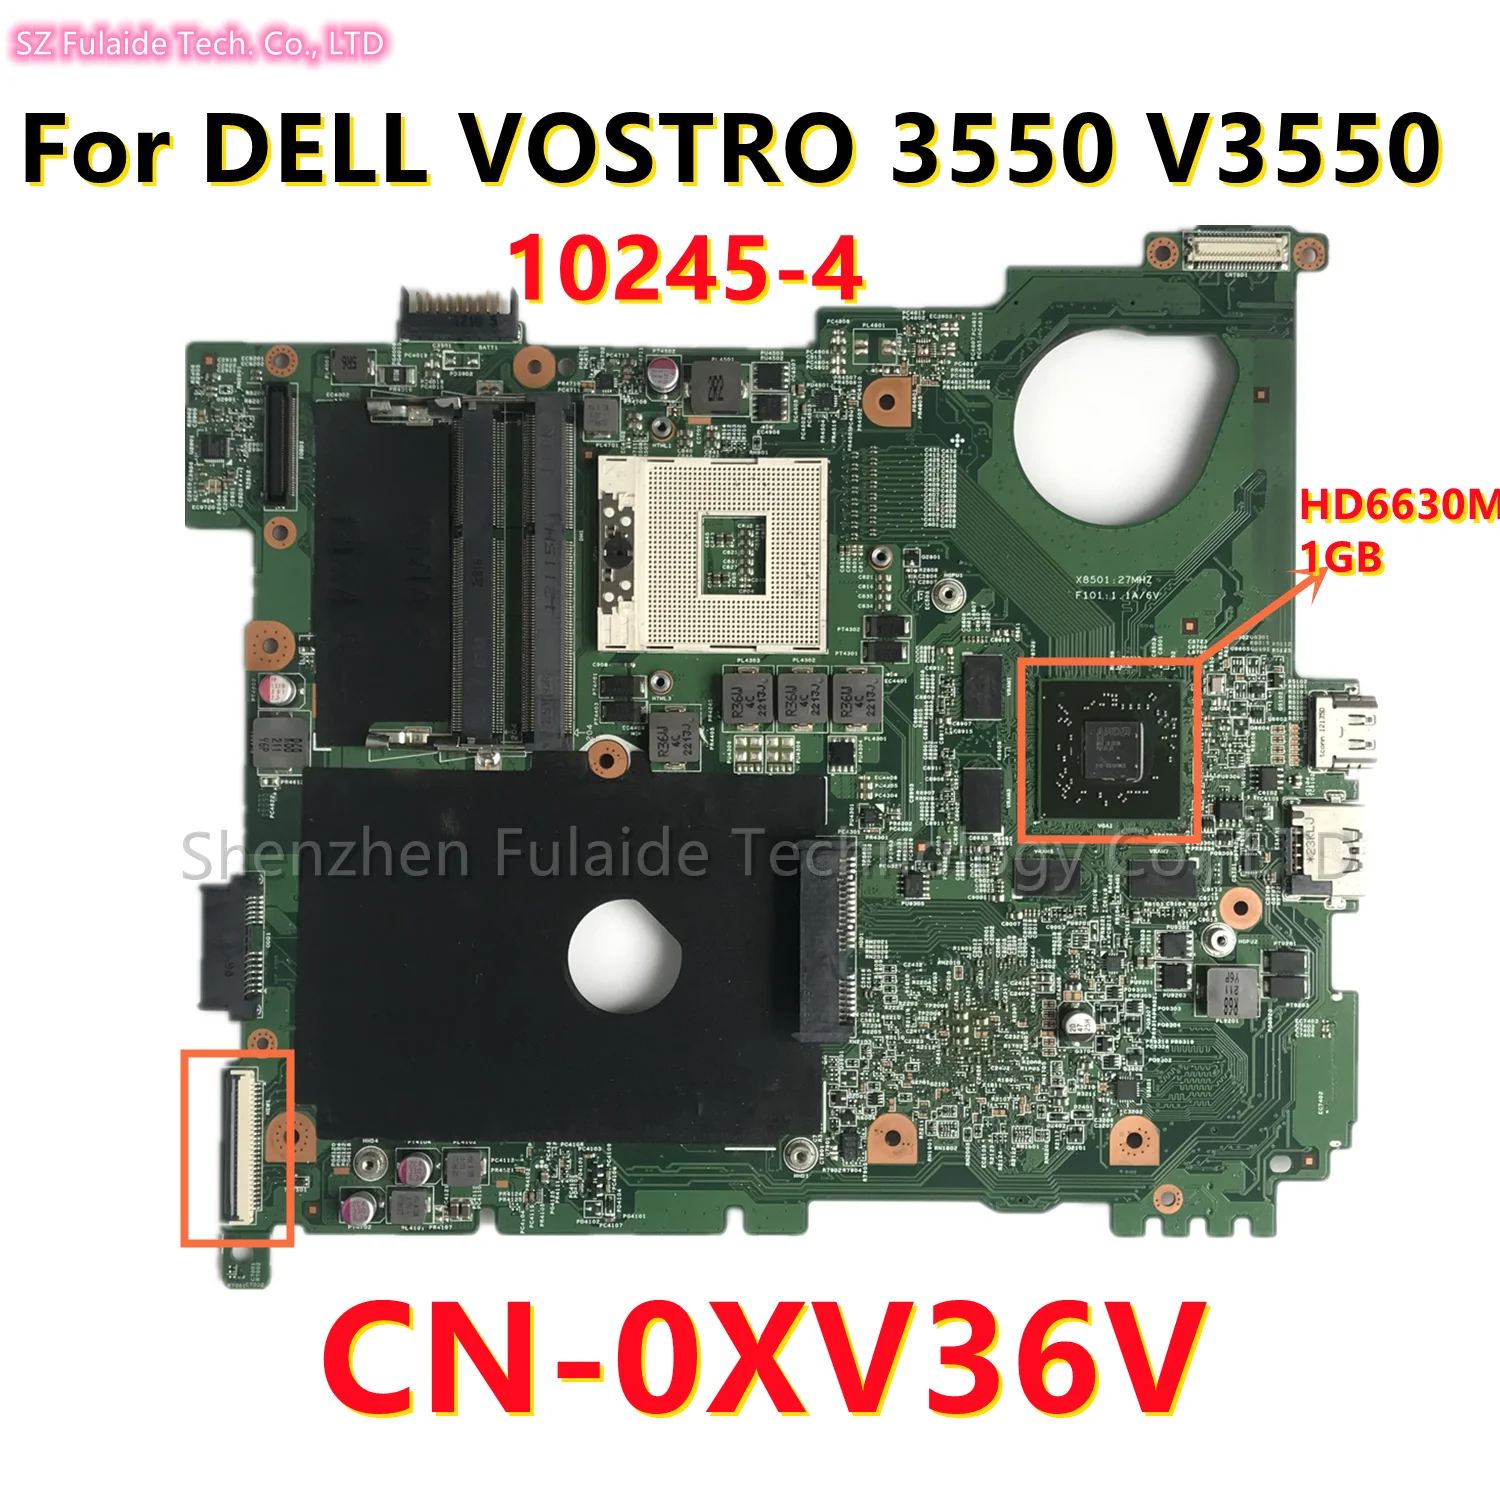 

For dell Vostro 3550 V3550 Laptop Motherboard CN-0XV36V 0XV36V XV36V 10245-4 With 216-0810005 GPU HM67 DDR3 100% Test Working